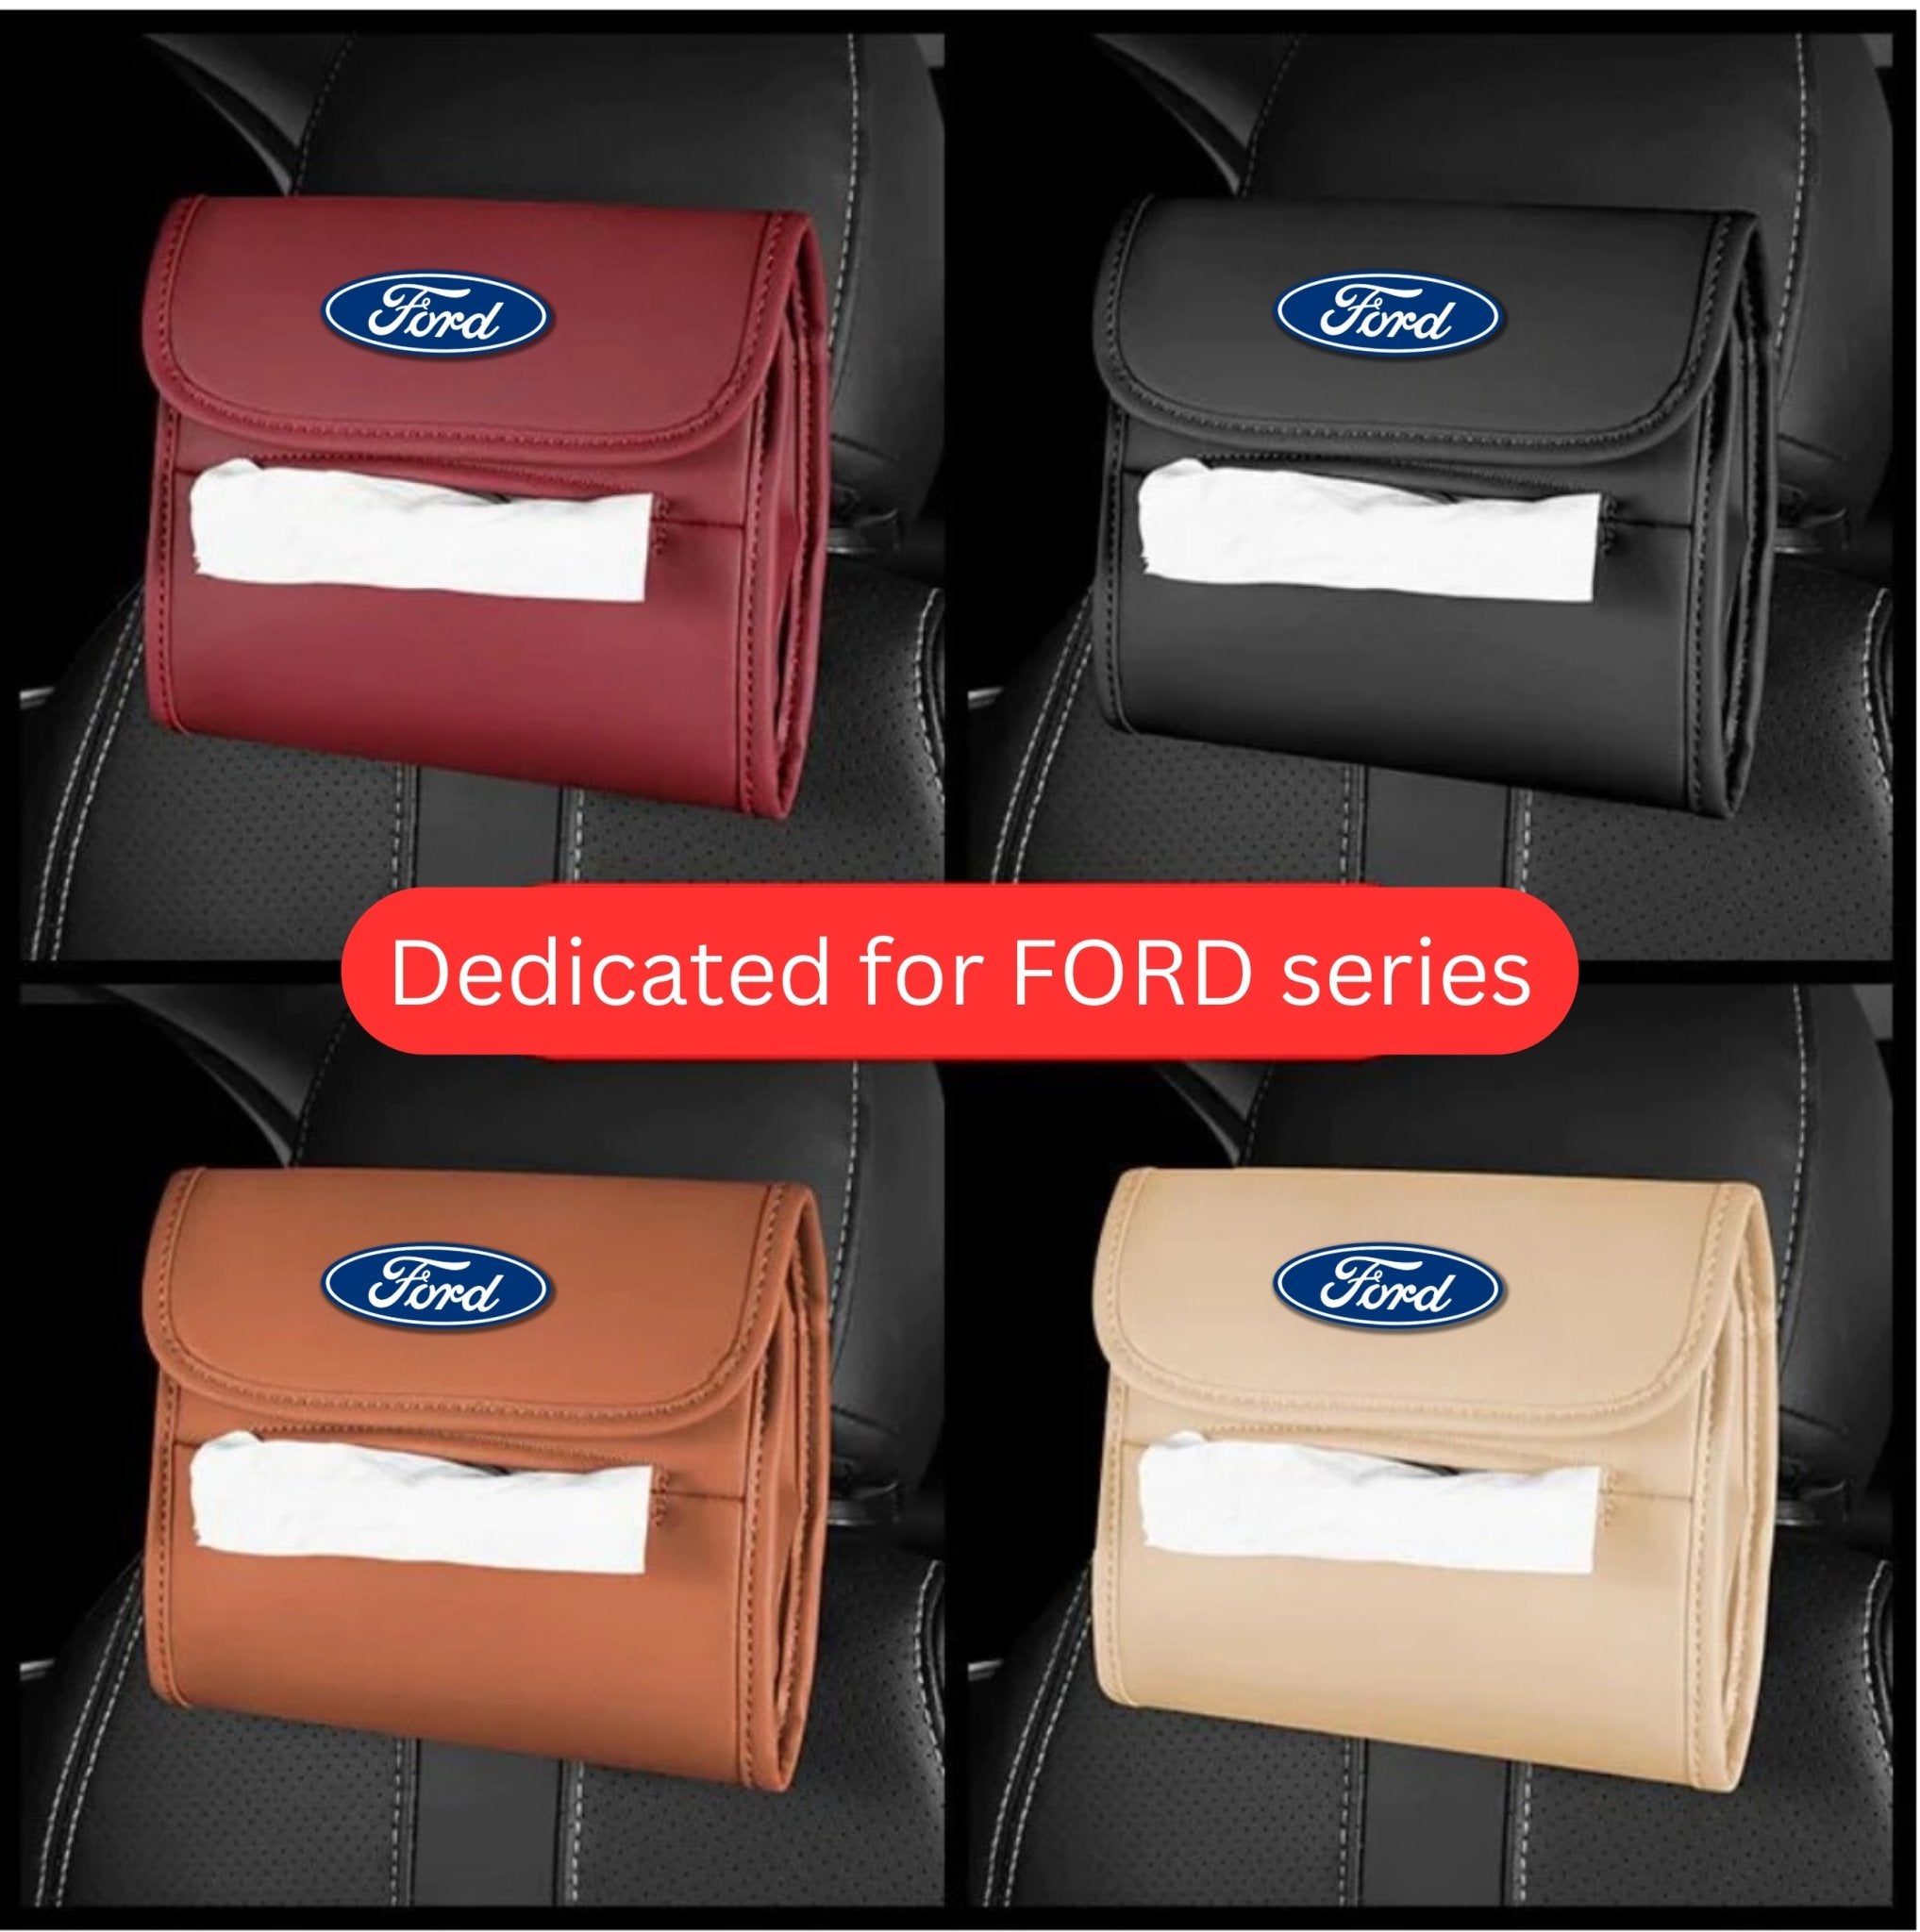 Multi-Functional Creative Car Tissue Box - 50% OFF - Home Essentials Store Retail